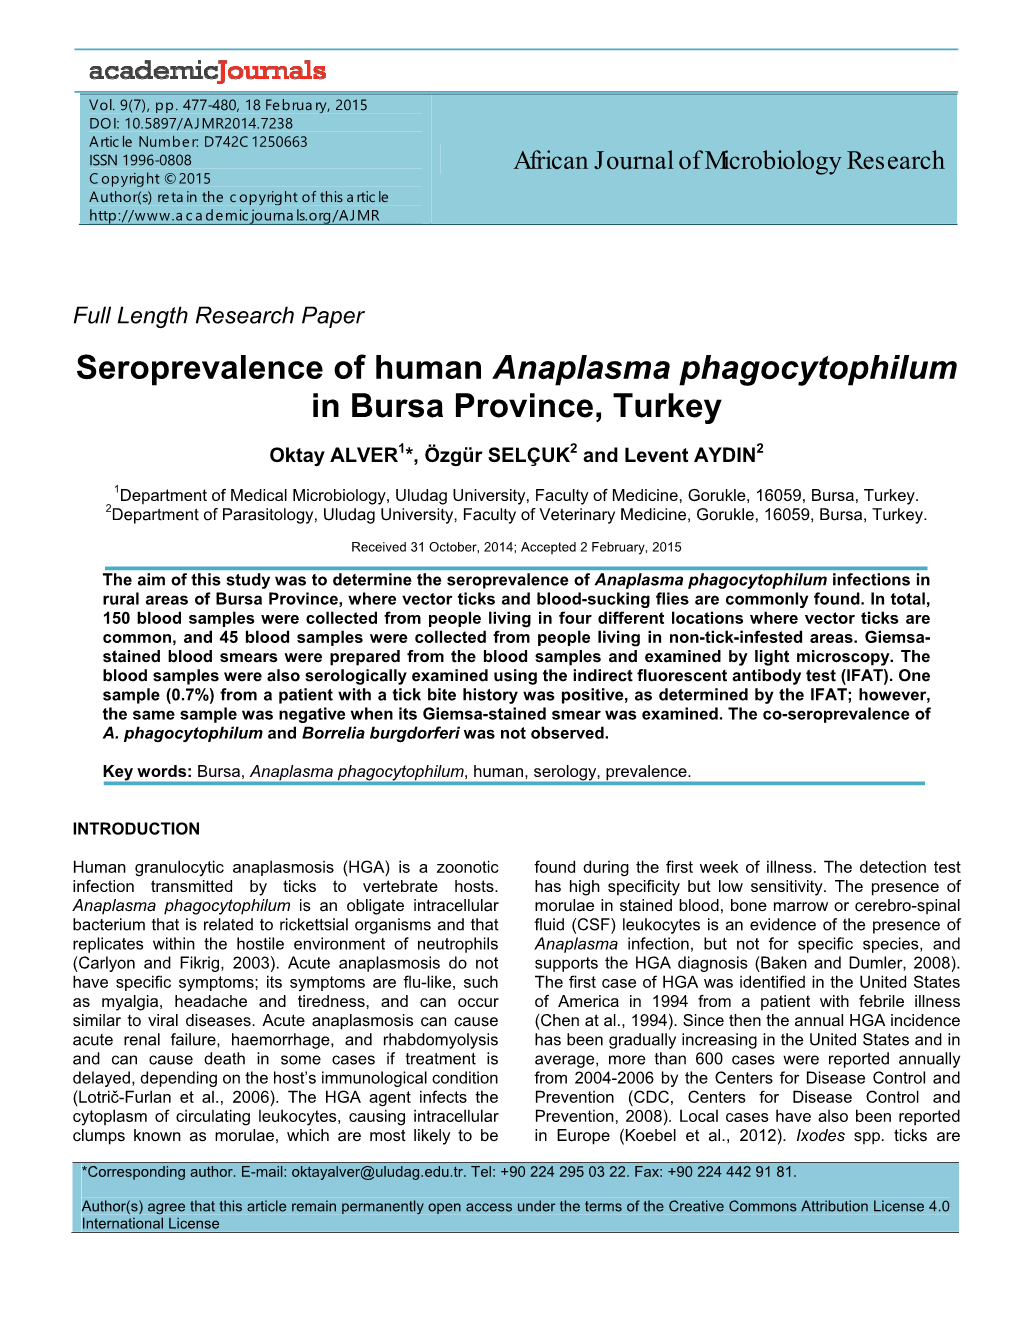 Seroprevalence of Human Anaplasma Phagocytophilum in Bursa Province, Turkey